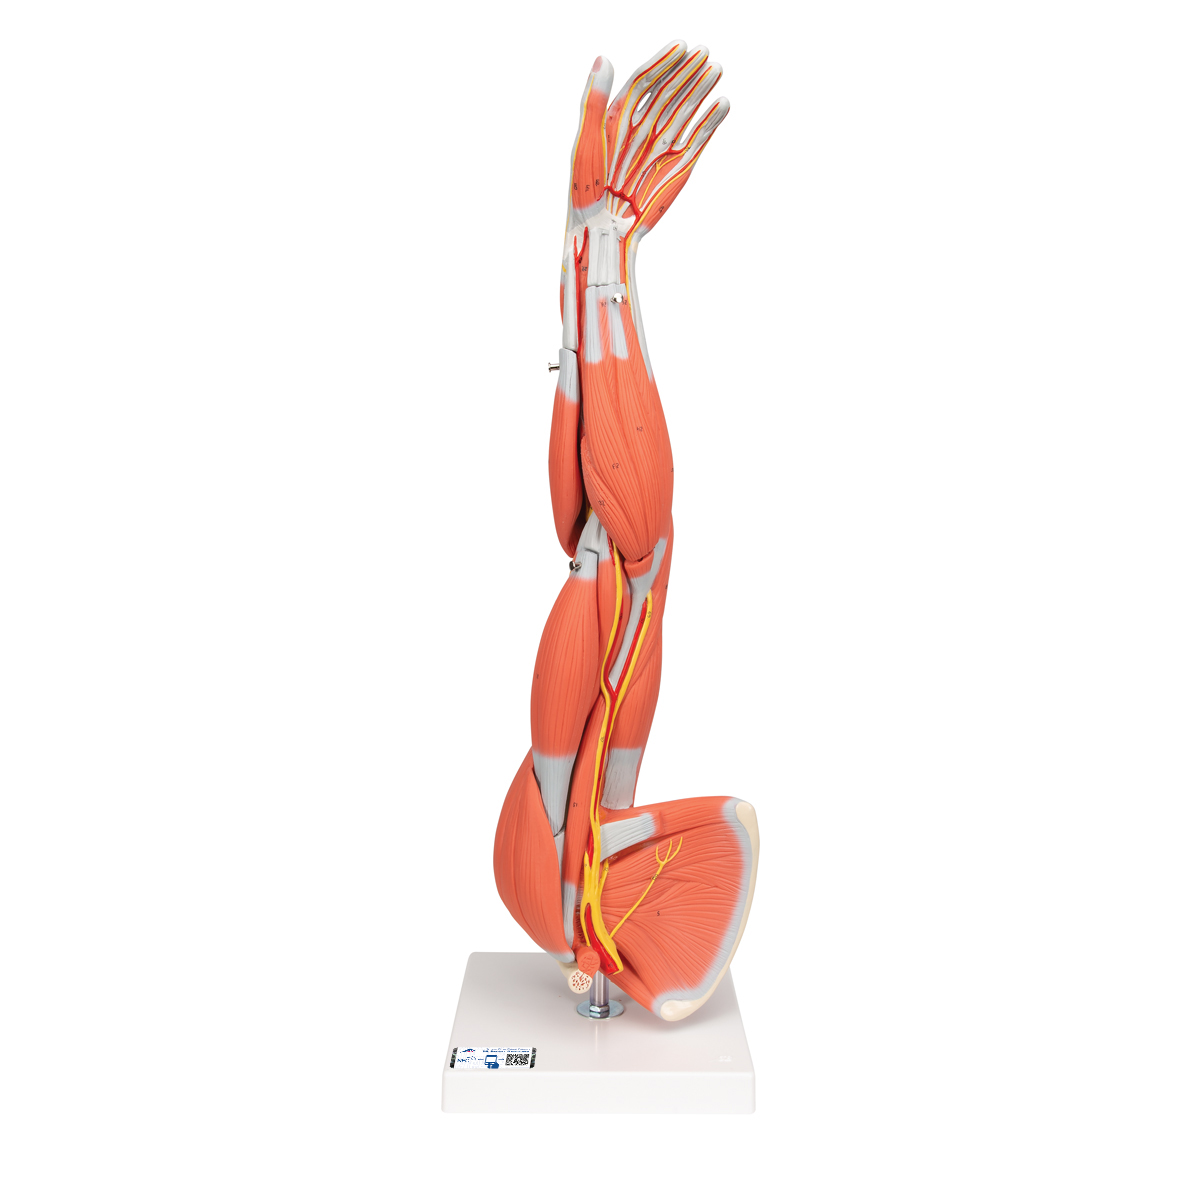 Armmuskel Modell, 6-teilig - 3B Smart Anatomy, Bestellnummer 1000015, M10, 3B Scientific